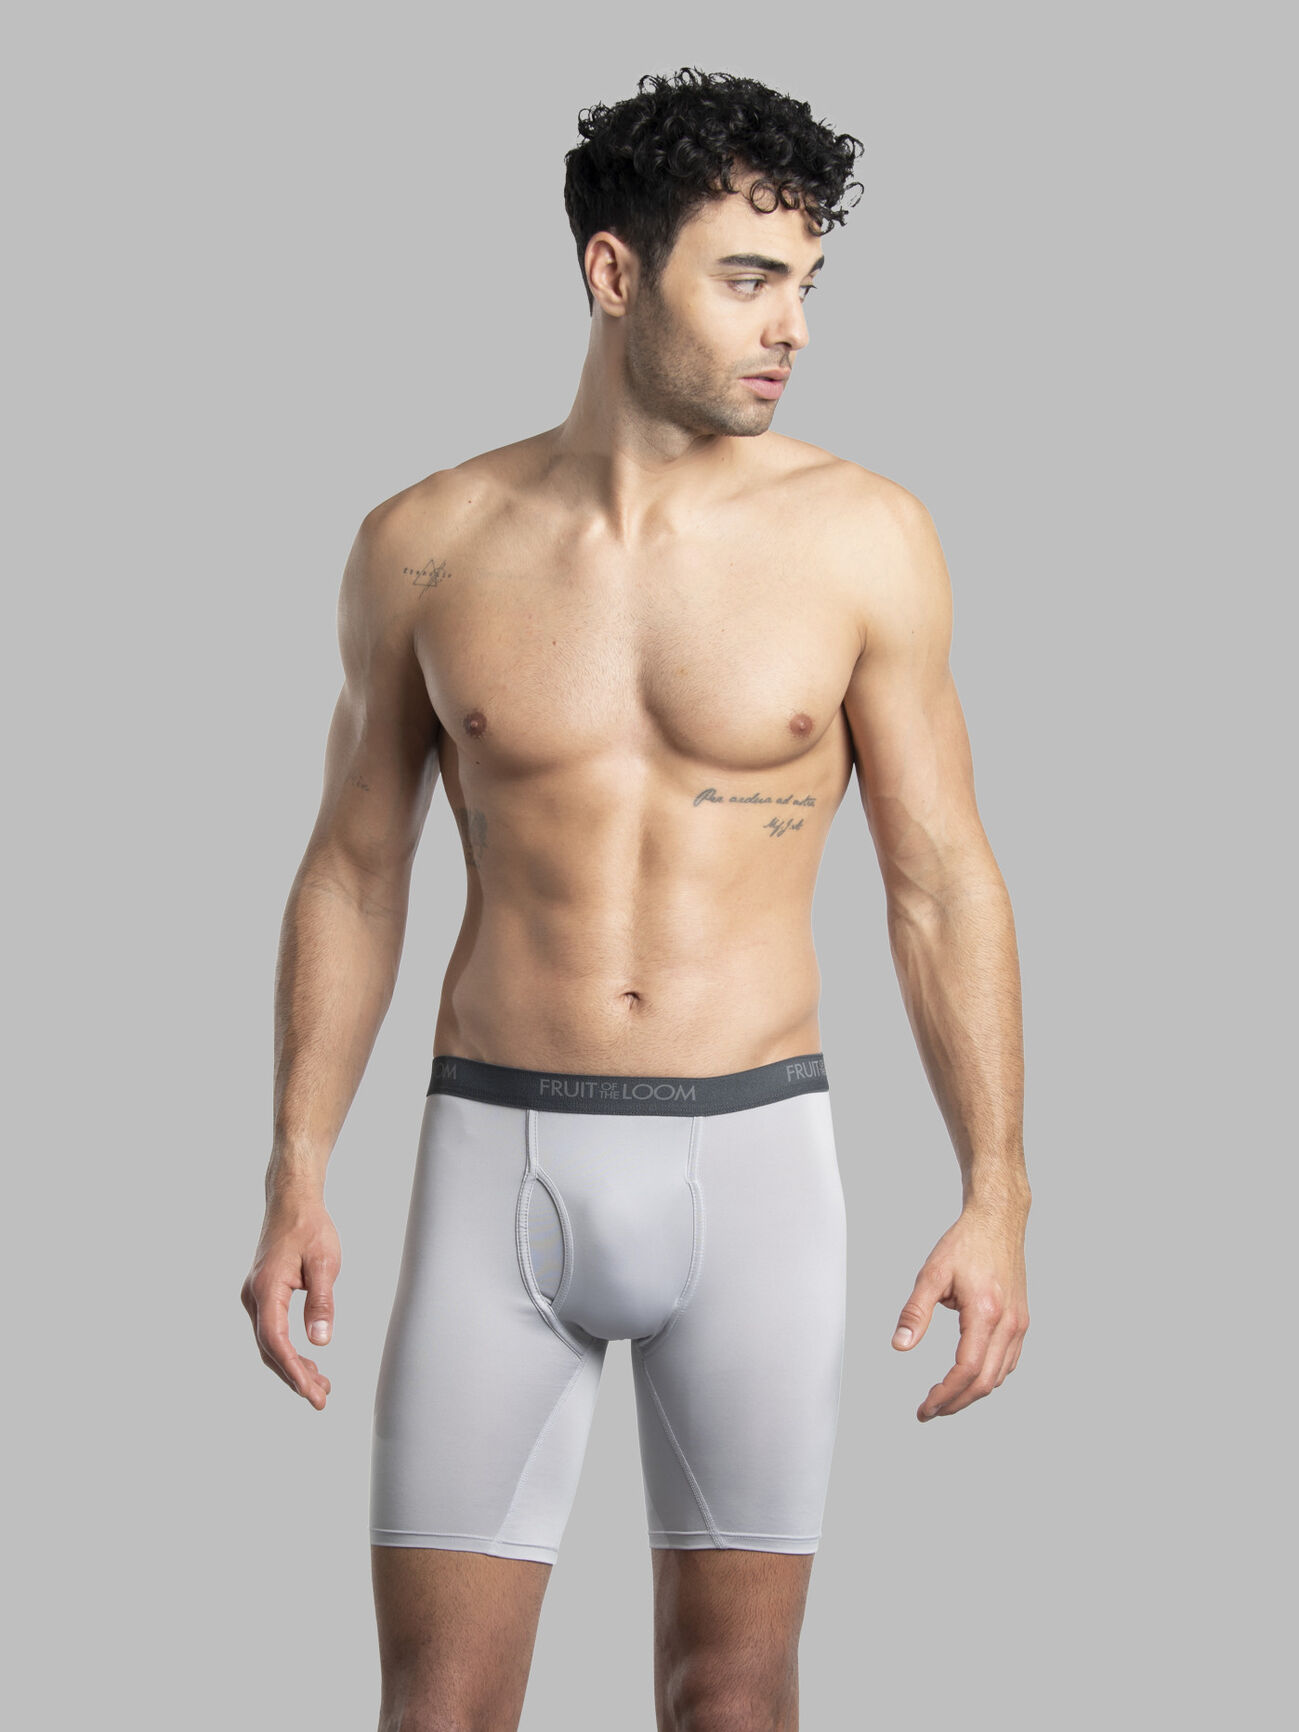 Wholesale Sexy Mens Skimpy Underwear, Stylish Undergarments For Him 